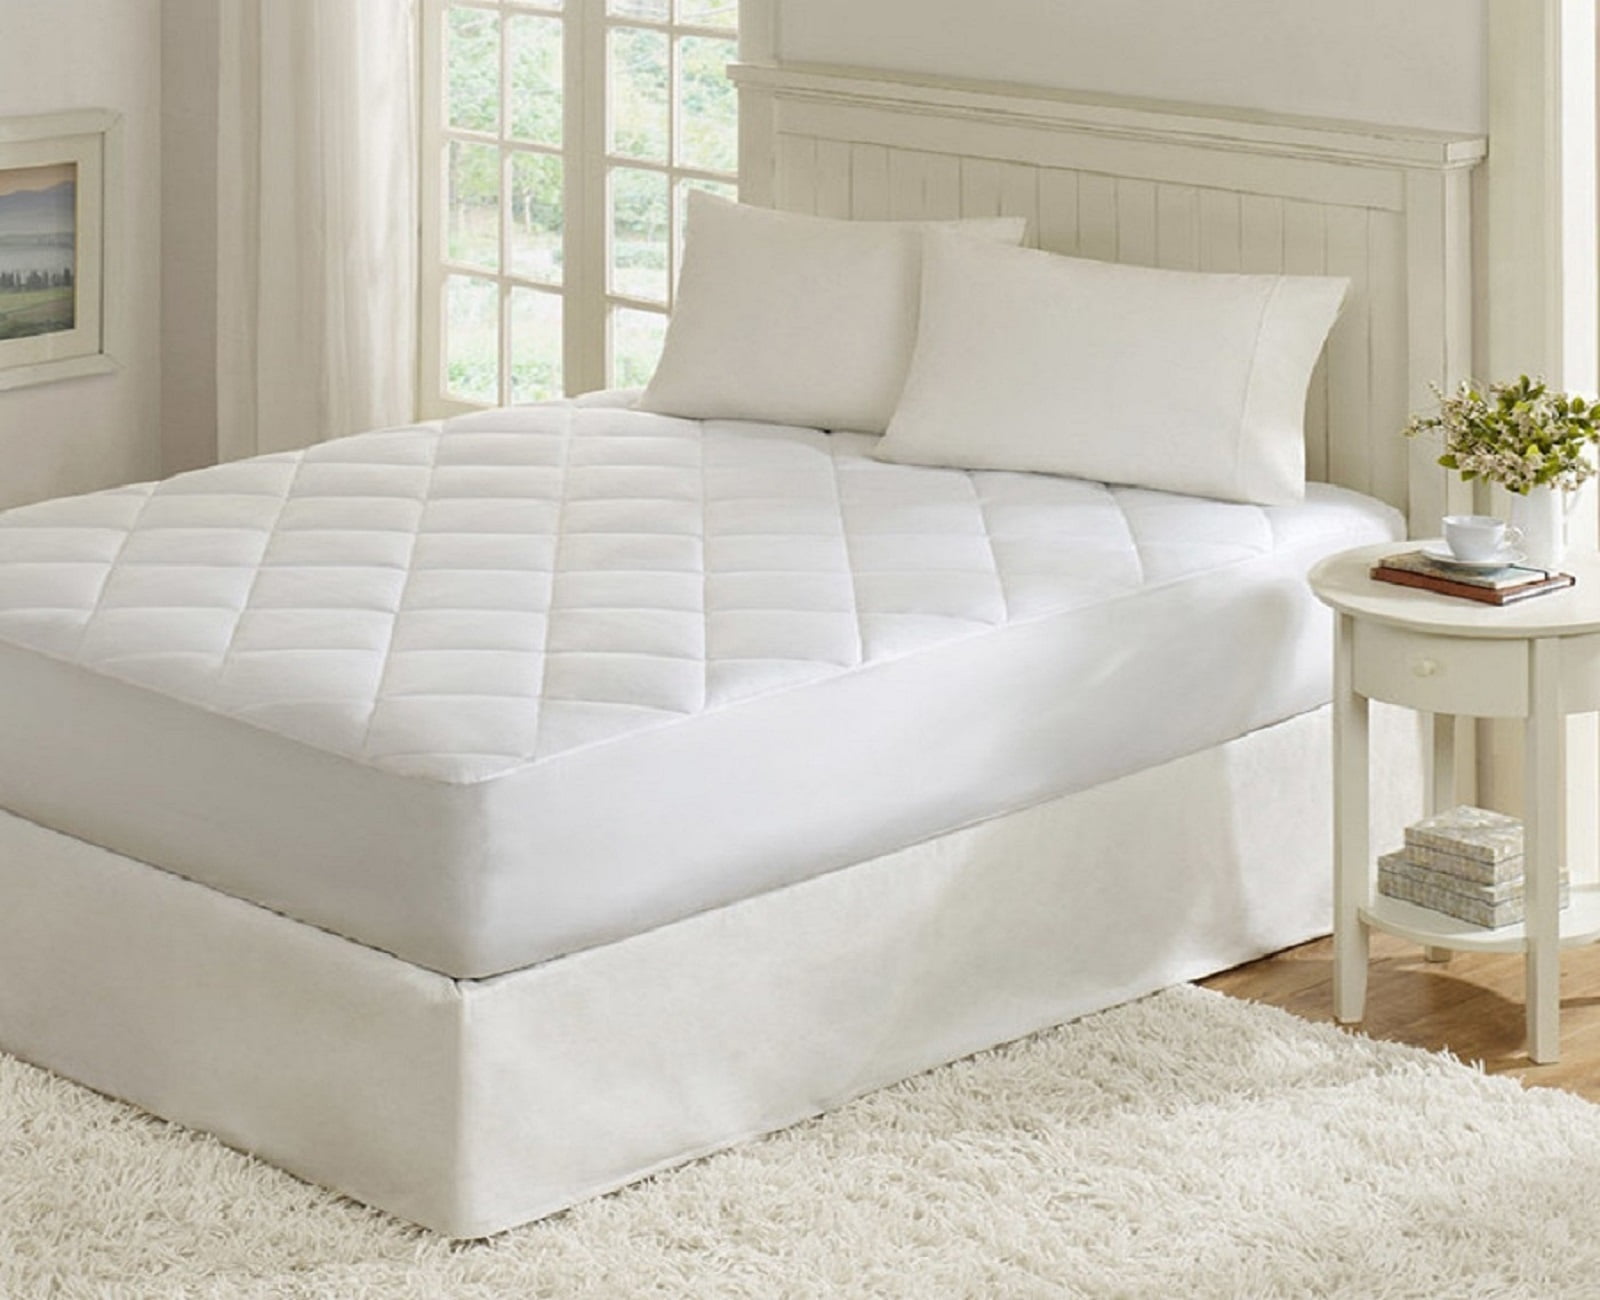 mattress pad x cover